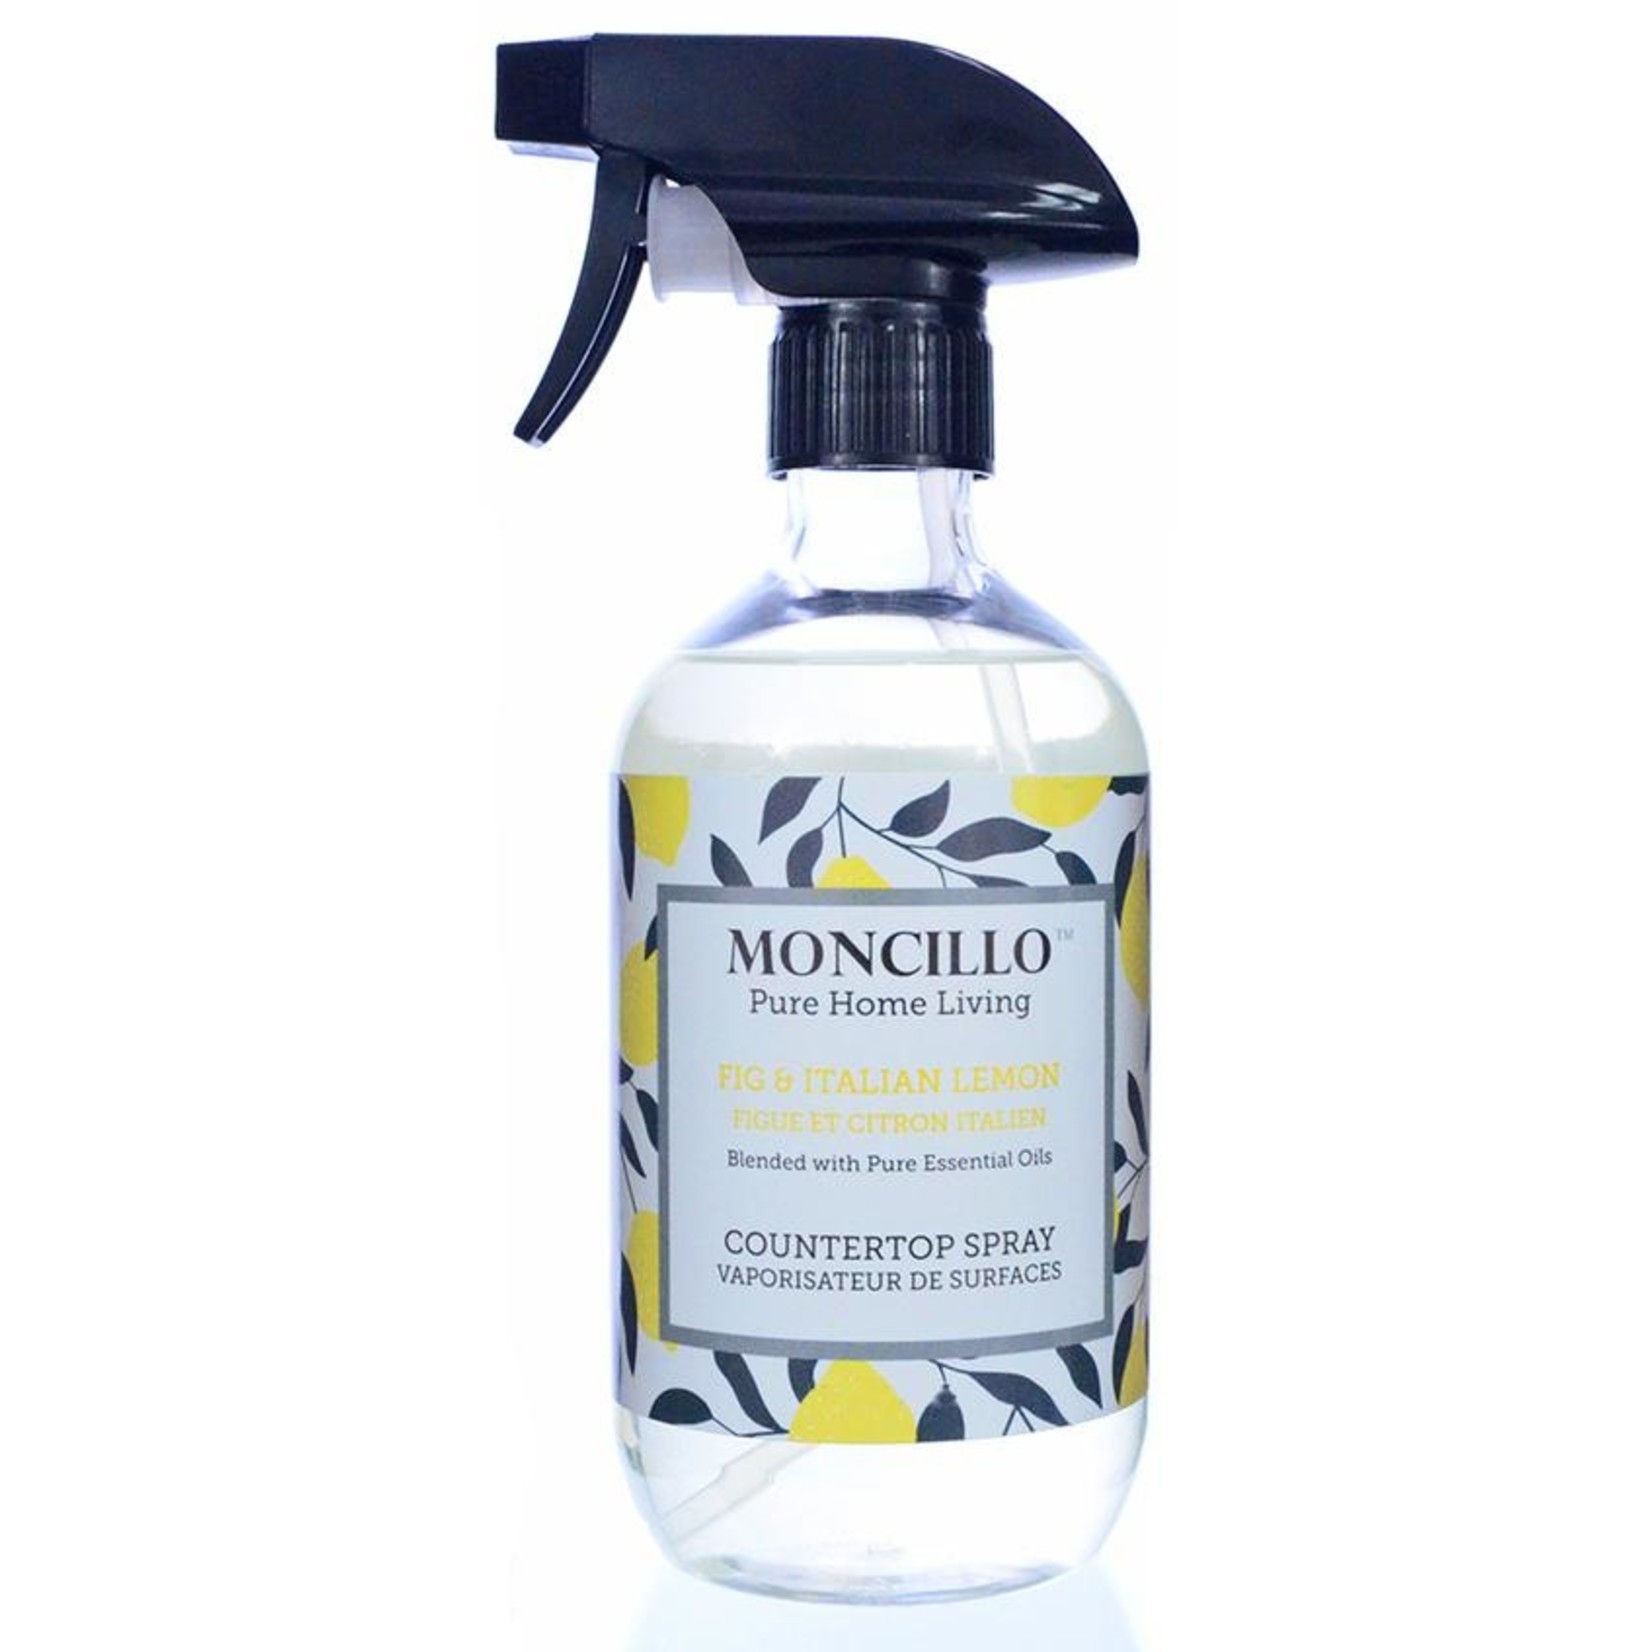 Finesse Home Moncillo Countertop Spray